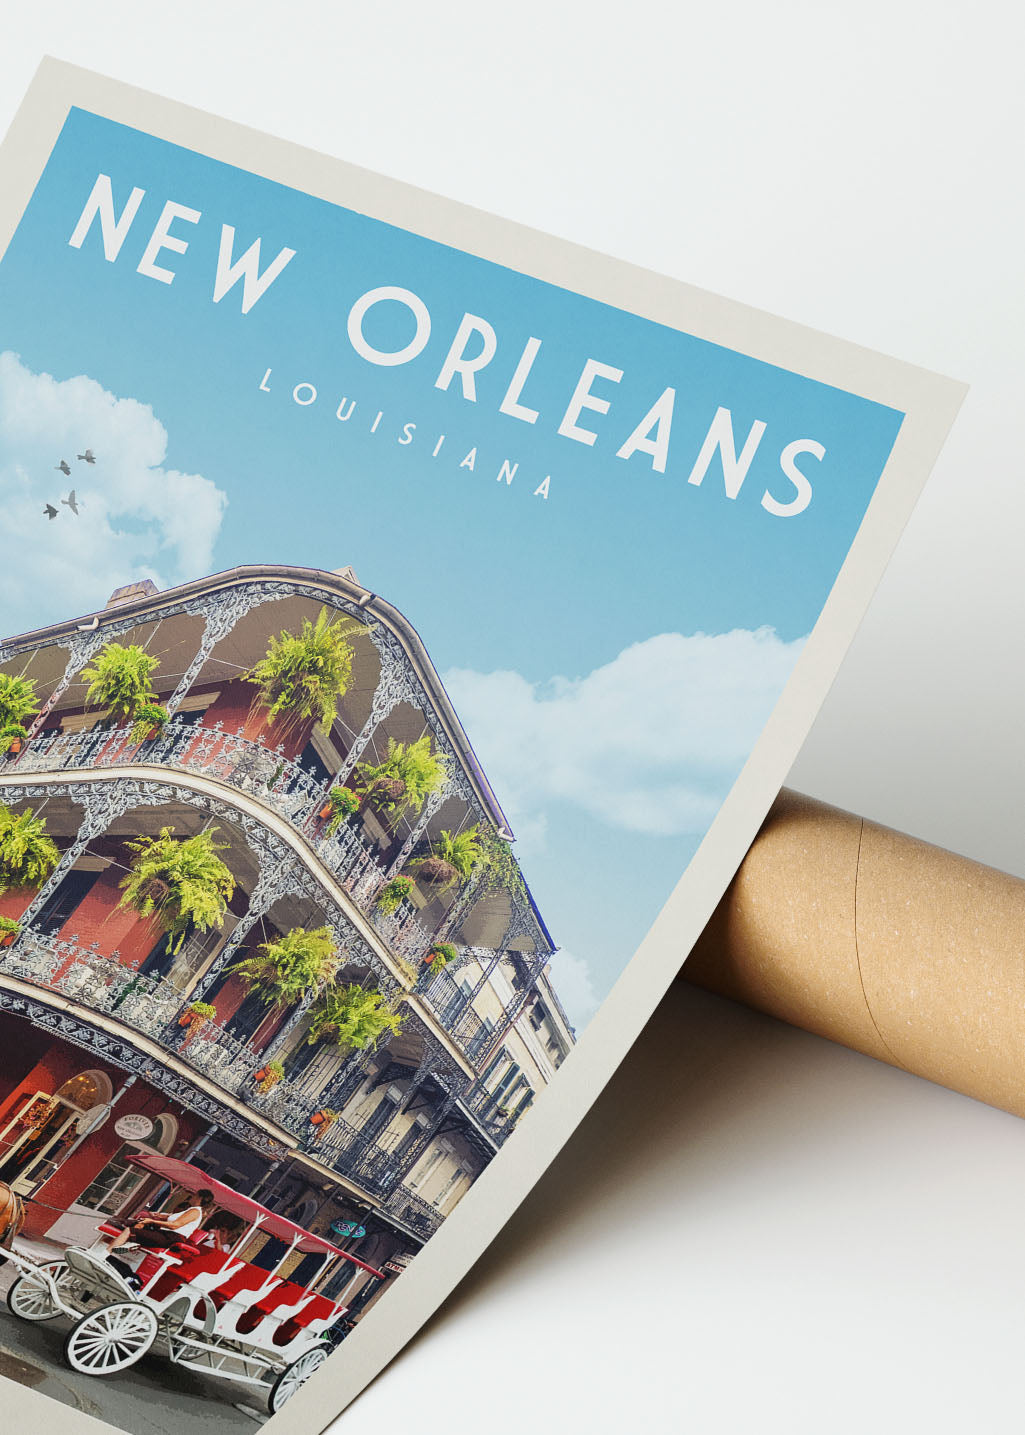 New Orleans, Louisiana - Vintage Travel Print - Vintaprints